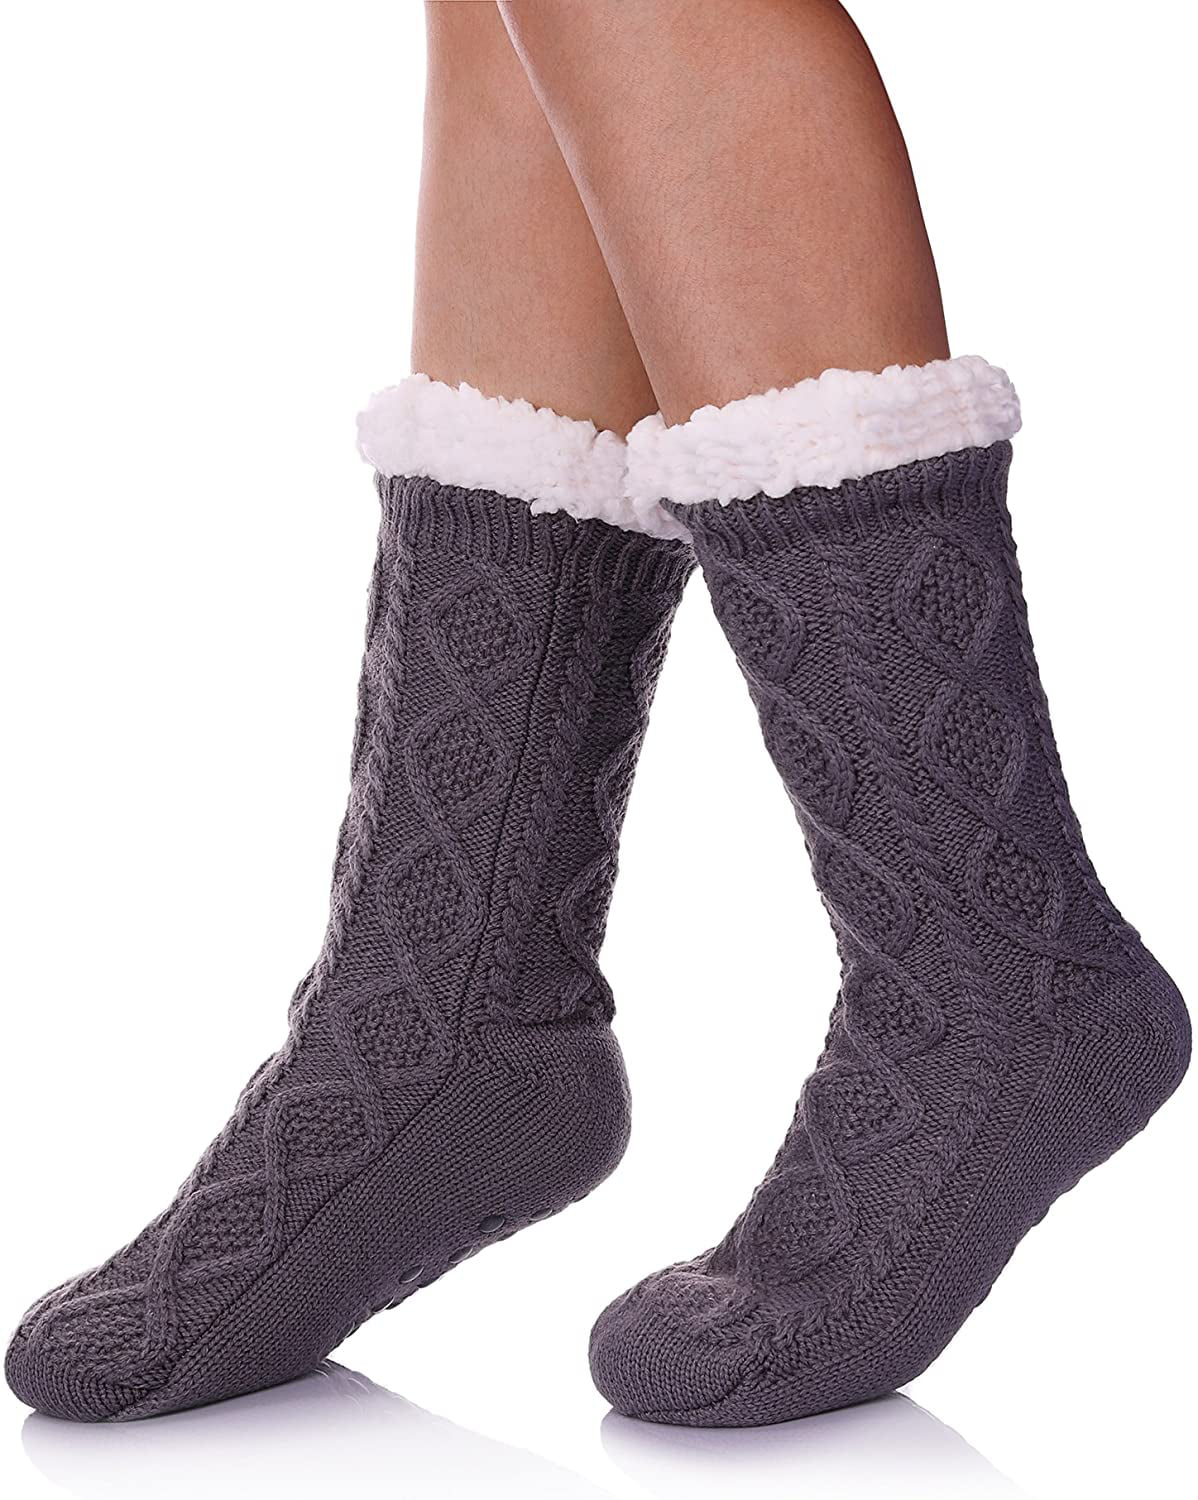 SDBING Mens Super Soft Warm Cozy Fuzzy Fleece-lined Winter With Grips Slipper Socks 